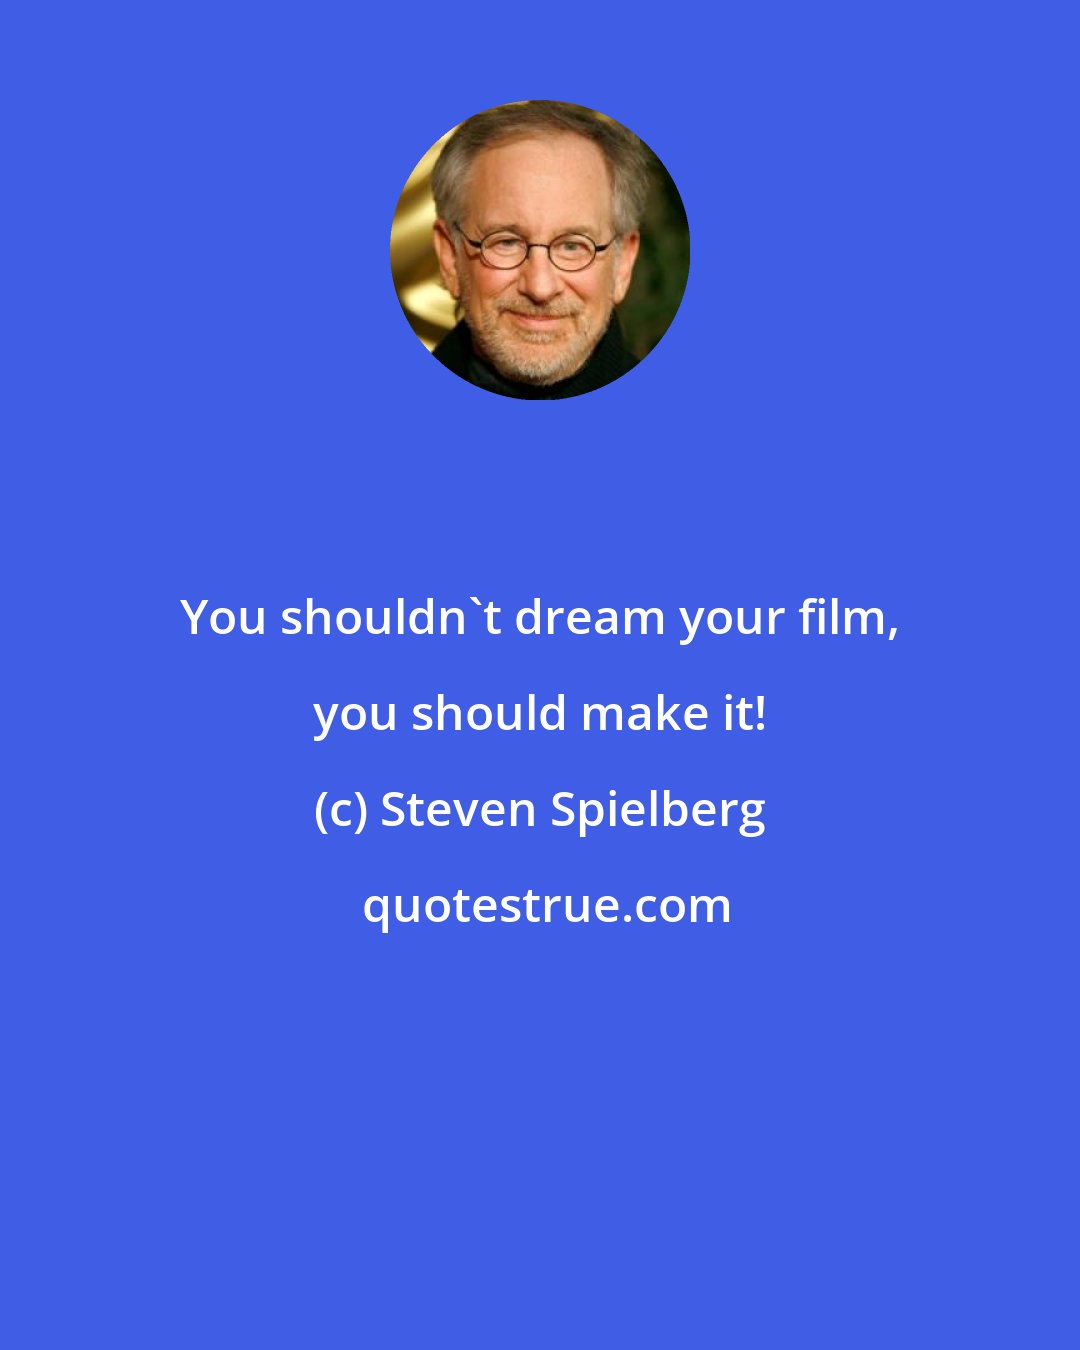 Steven Spielberg: You shouldn't dream your film, you should make it!